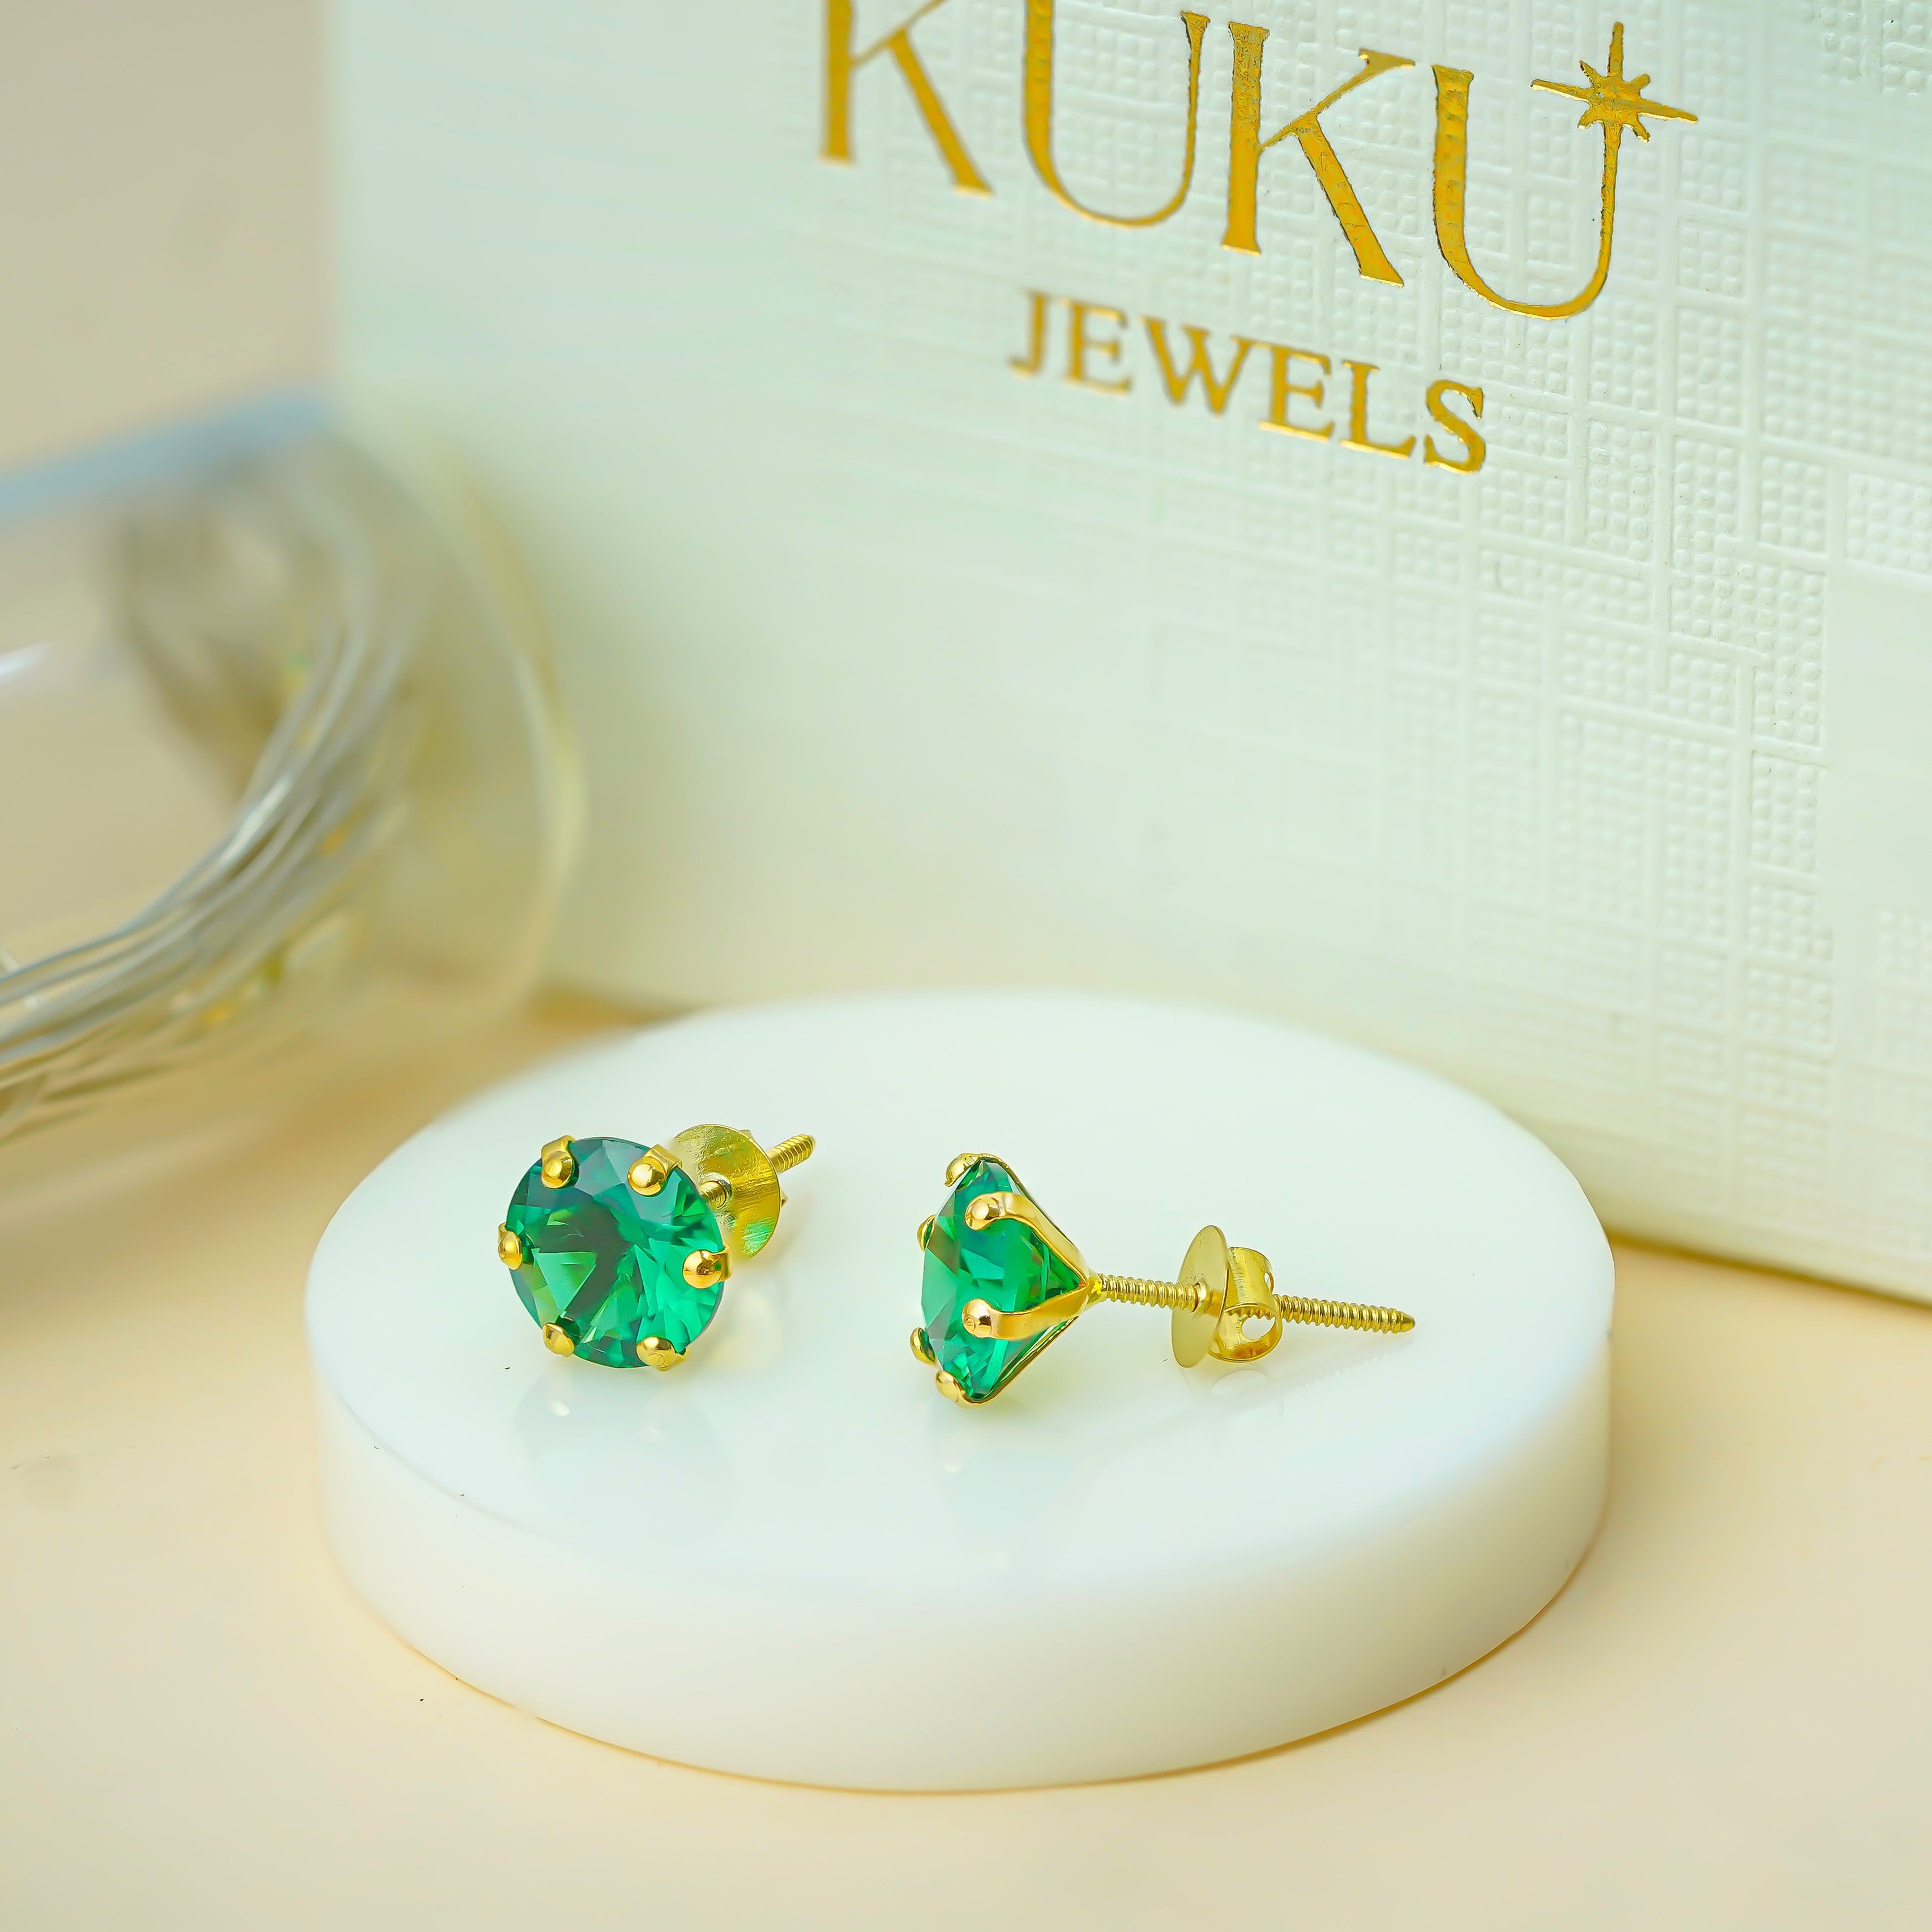 10 KT Gold Green Round Cut Diamond Stud Earrings